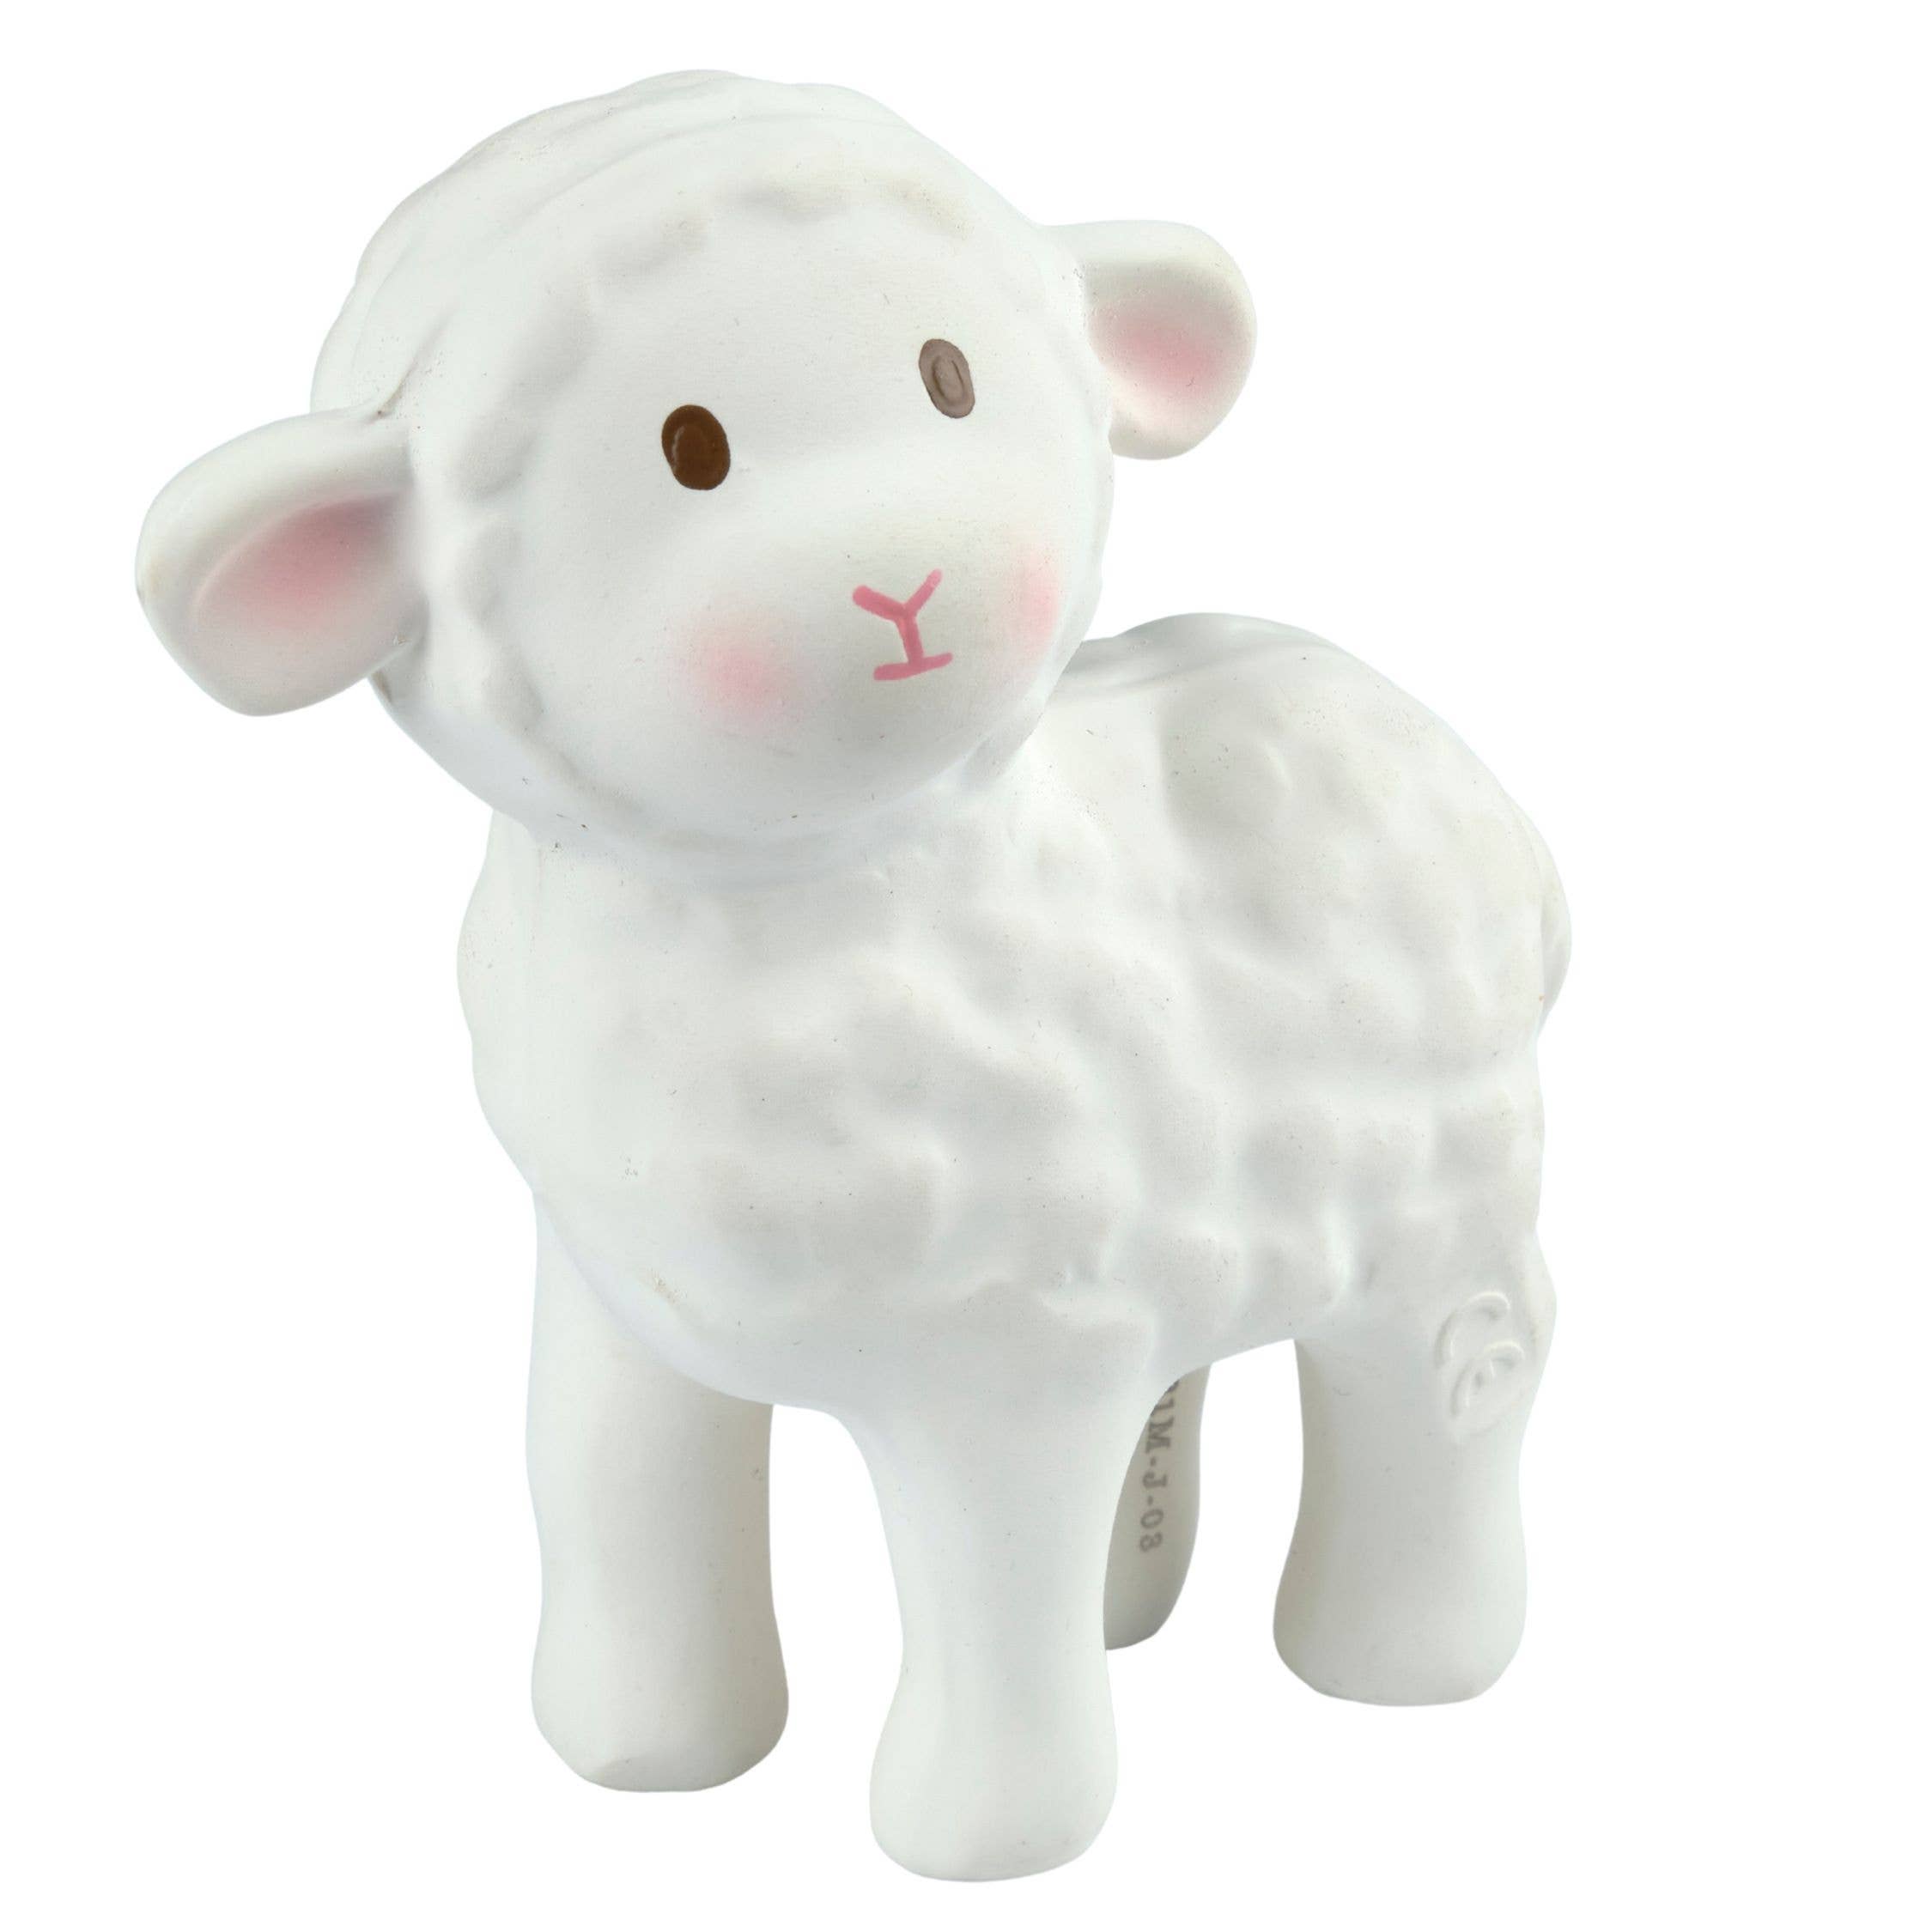 Tikiri Toys LLC - Bahbah the Lamb Organic Rubber Teether, Rattle & Bath Toy